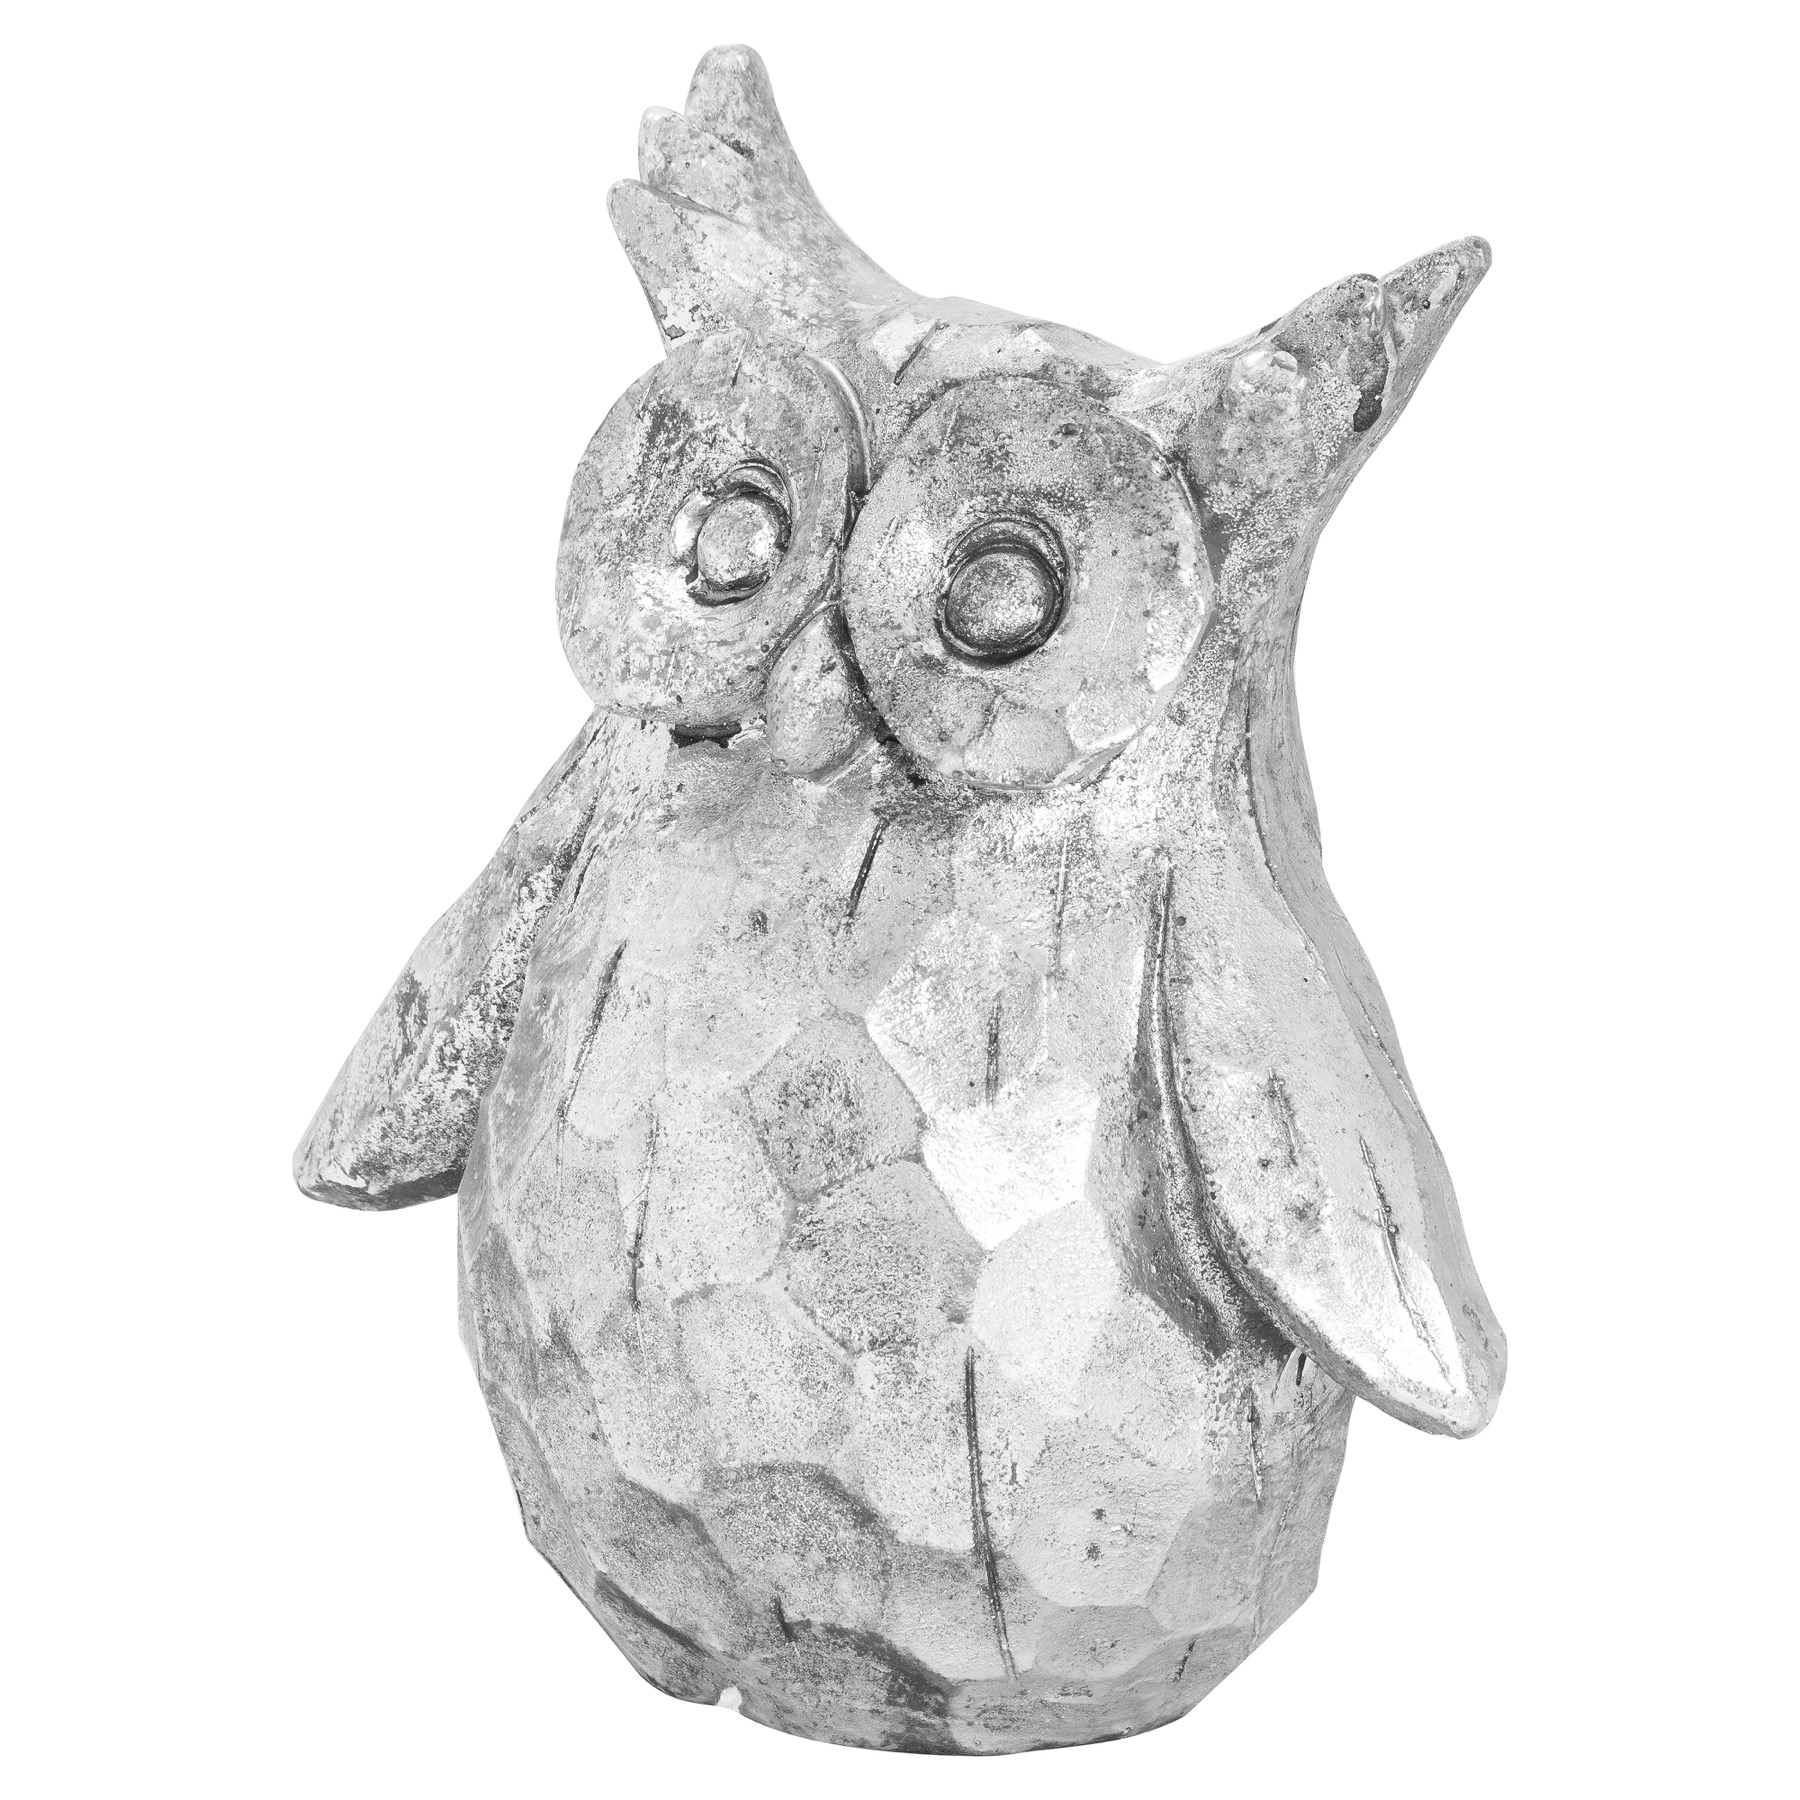 Olive The Silver Ceramic Owl - Image 1